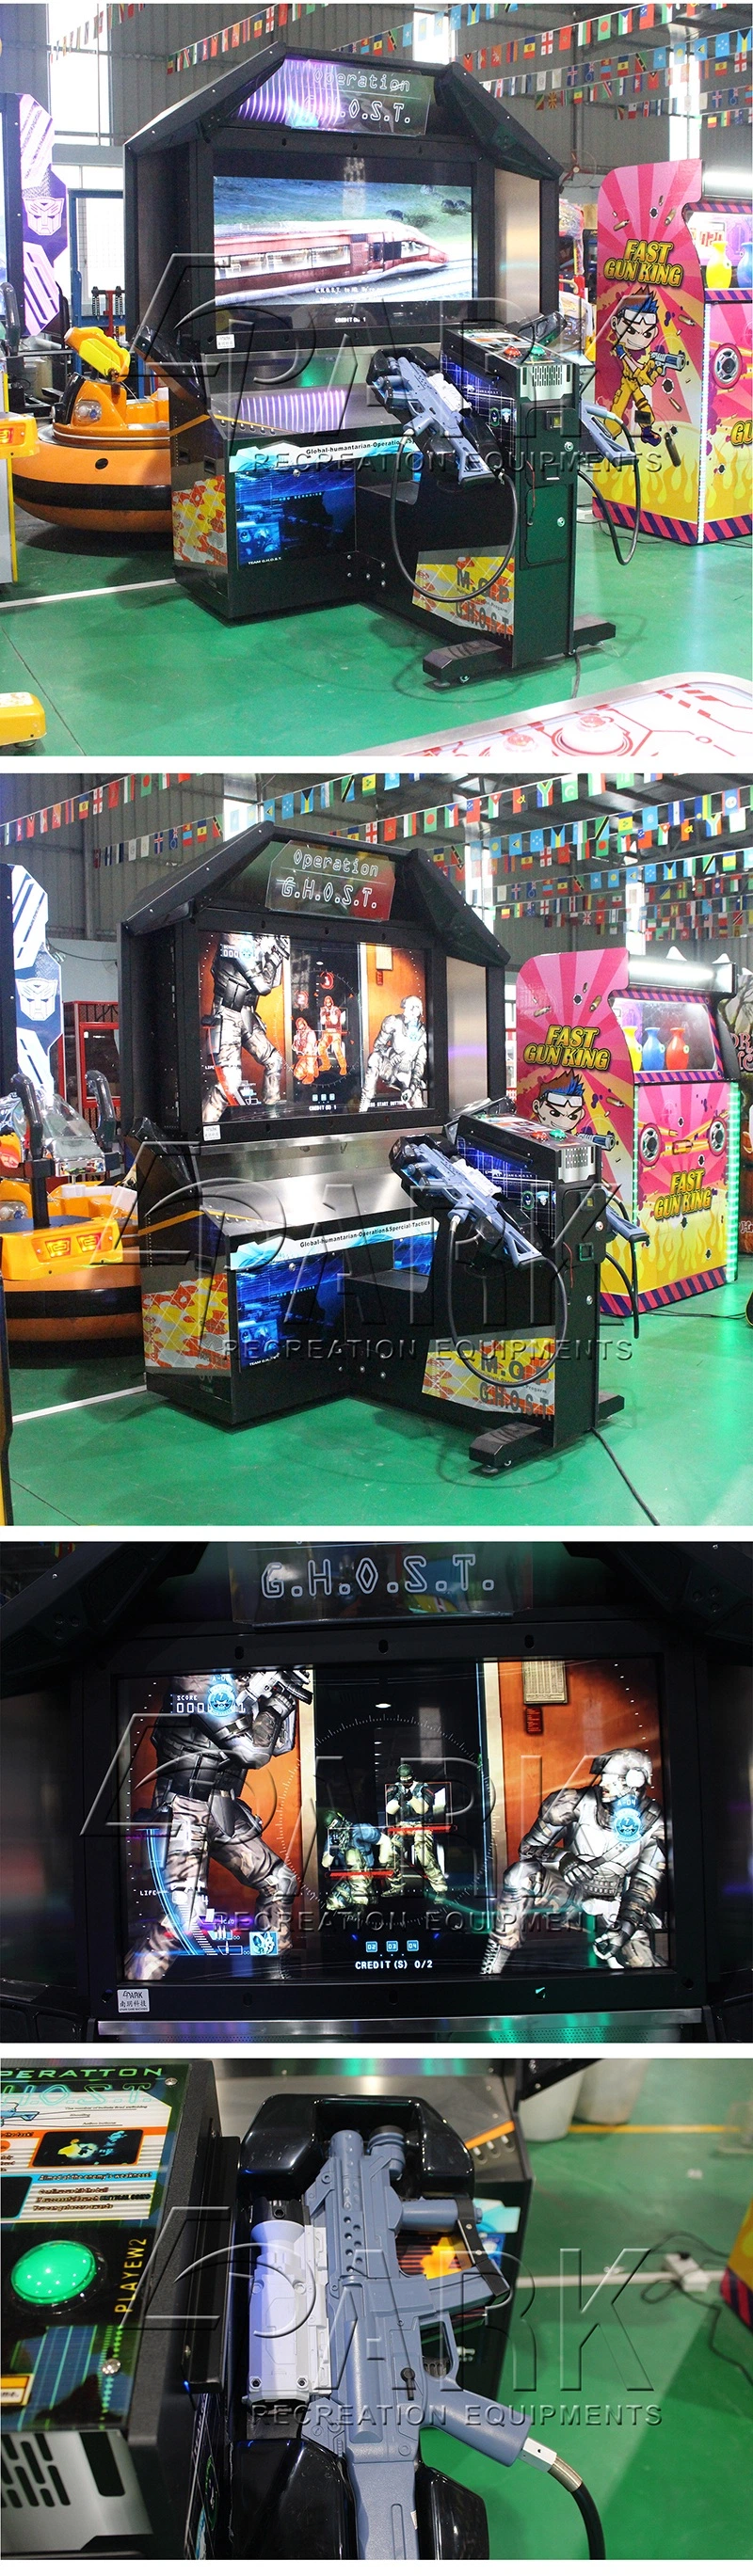 Operation Ghost Epark Light Gun Shooter Game Video Arcade Machine